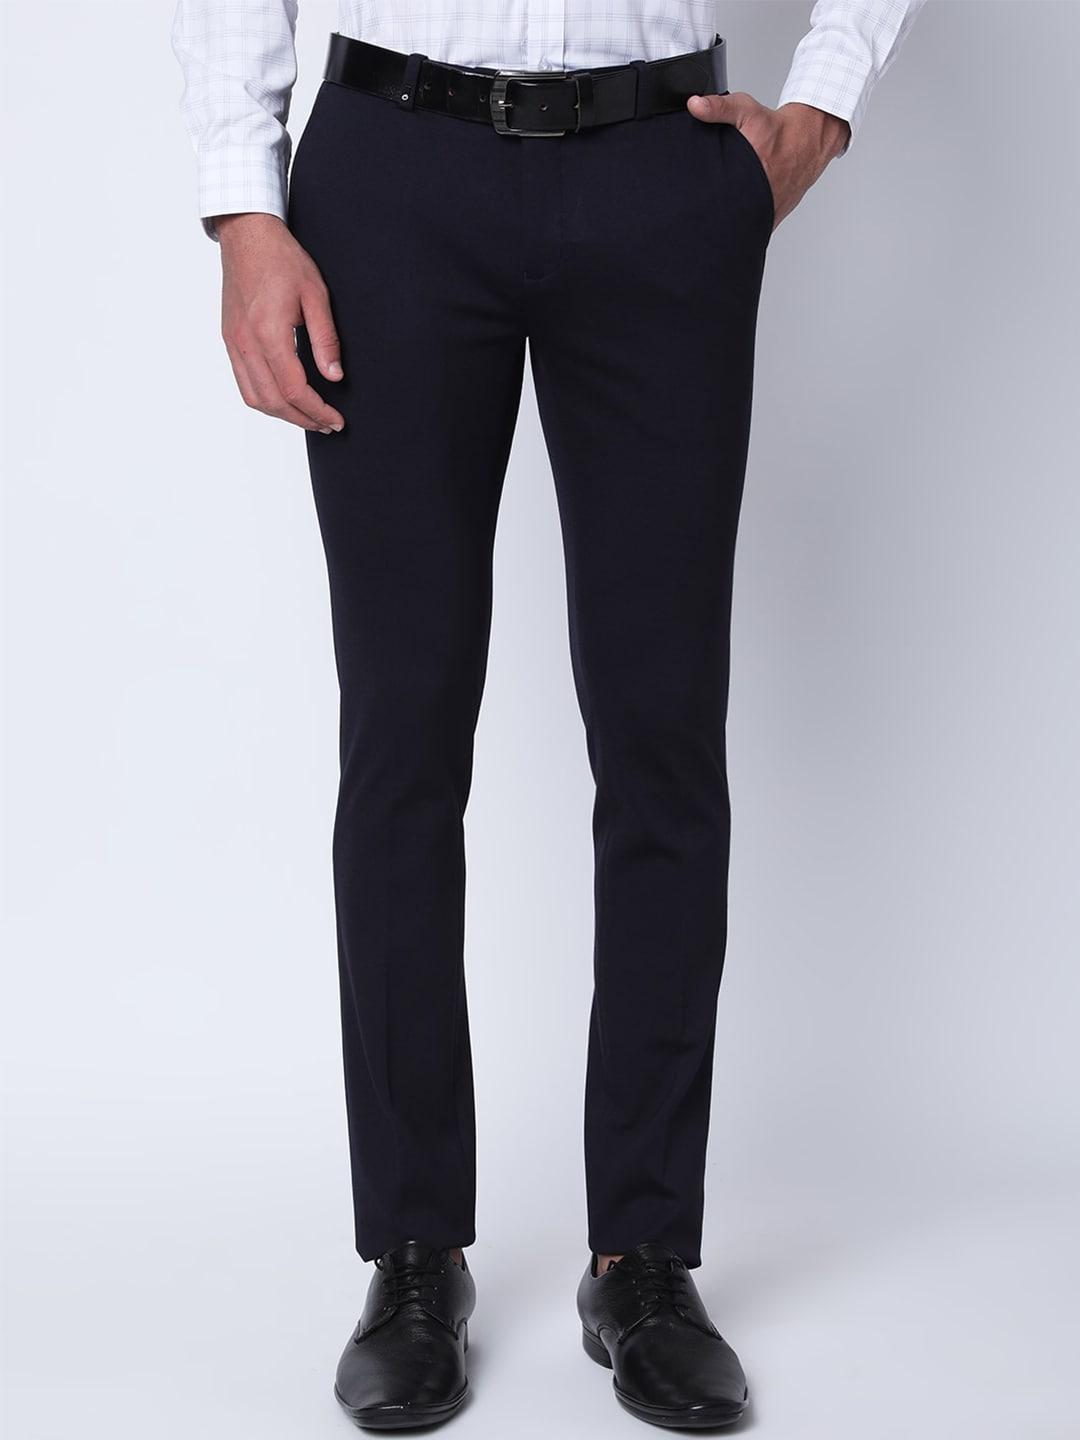 oxemberg-men-slim-fit-formal-trousers